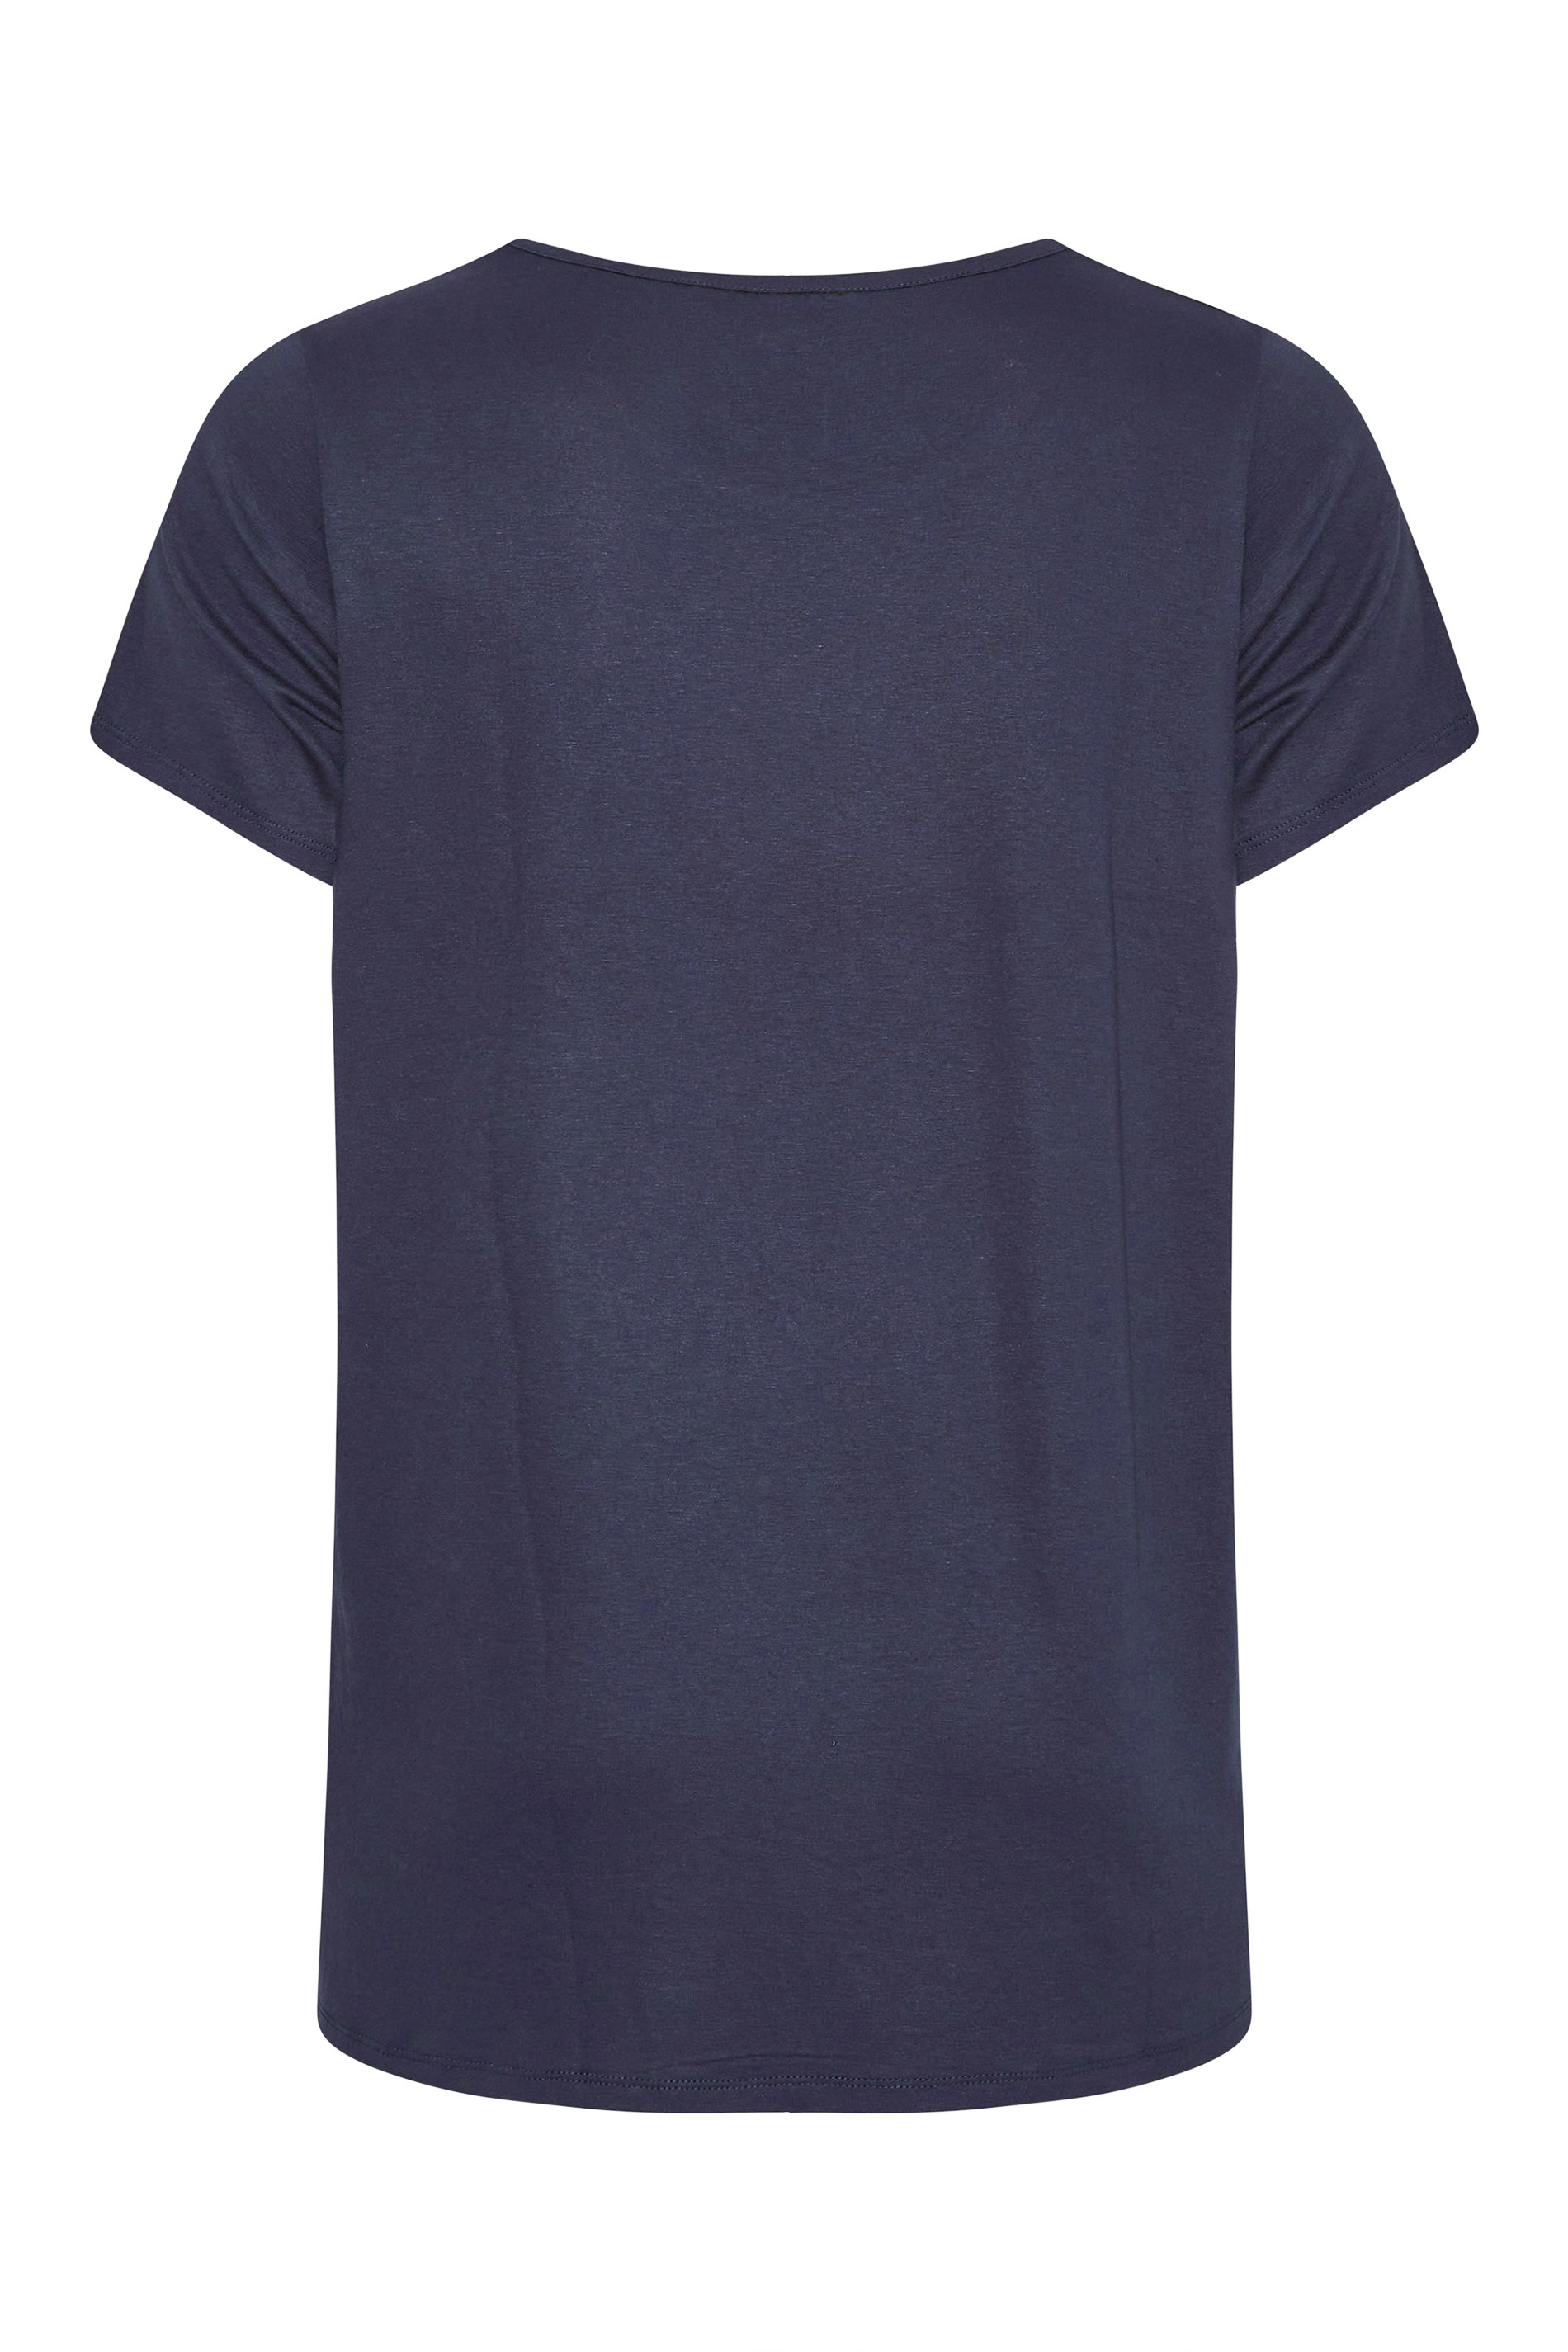 Grande taille  Tops Grande taille  T-Shirts | T-Shirt Bleu Marine Design Aztèque - MU42208